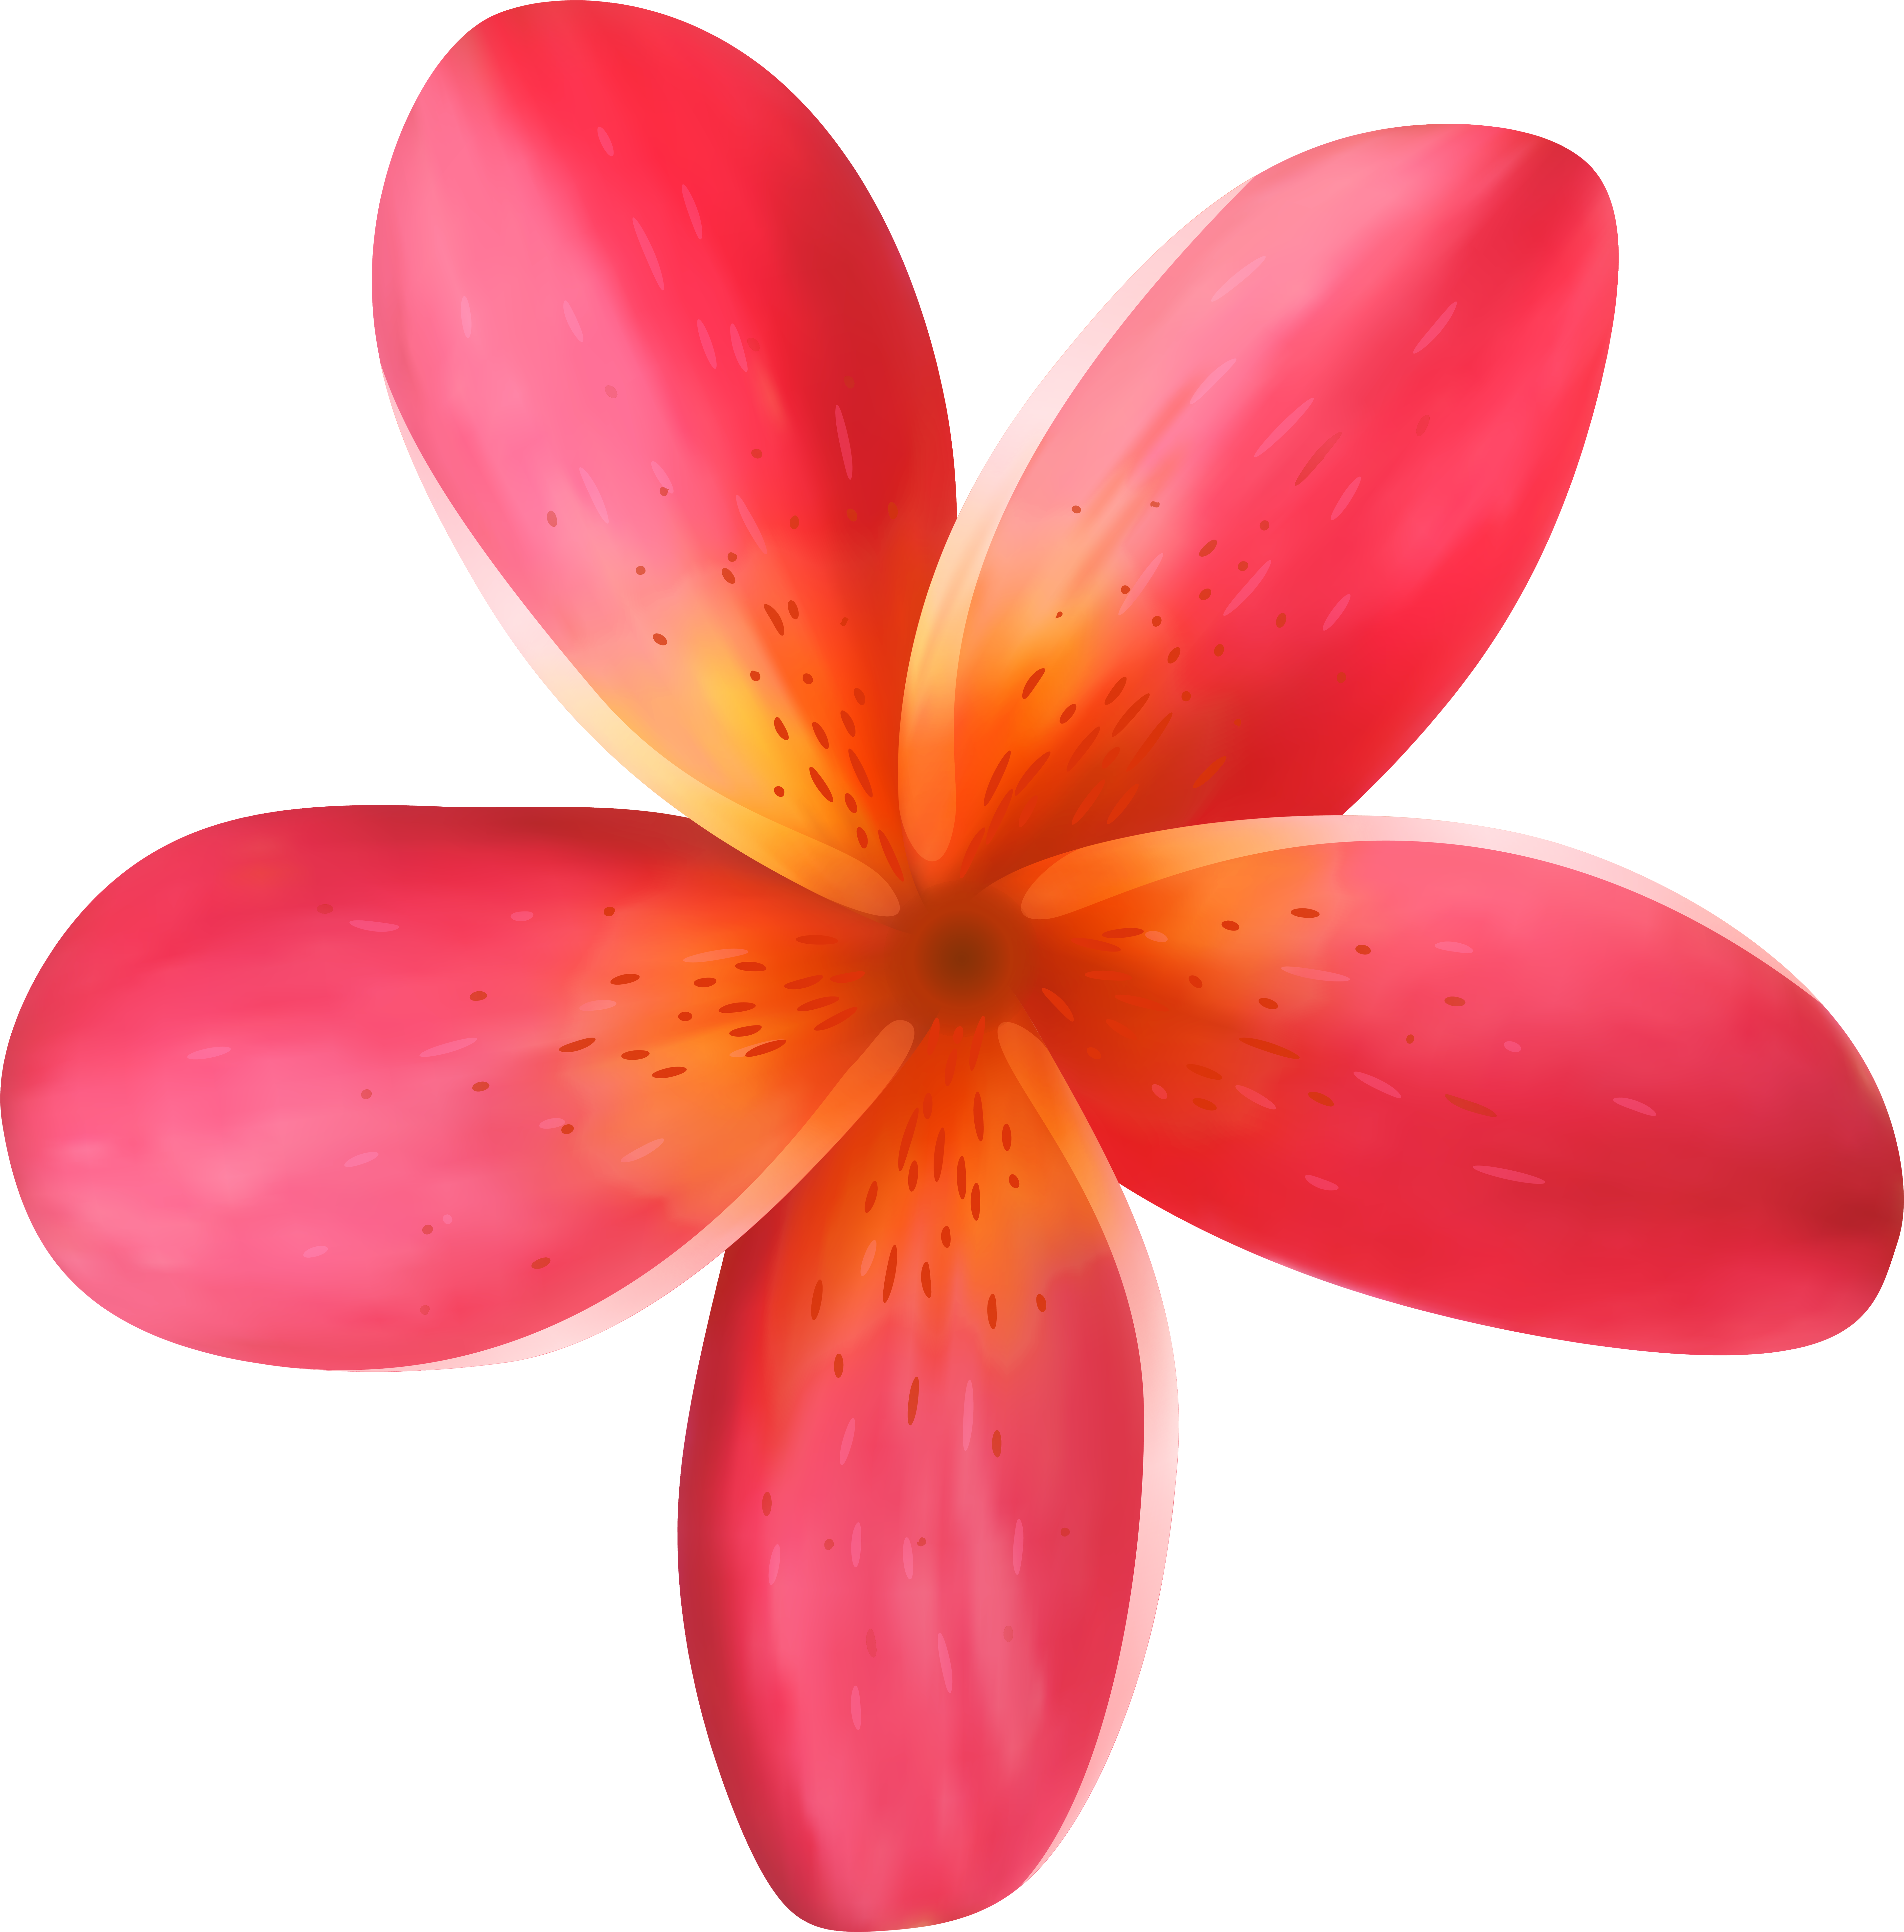 Tropical Flower Clipart, Explore Pictures - Tropical Flower Clipart, Explore Pictures (7884x8000)